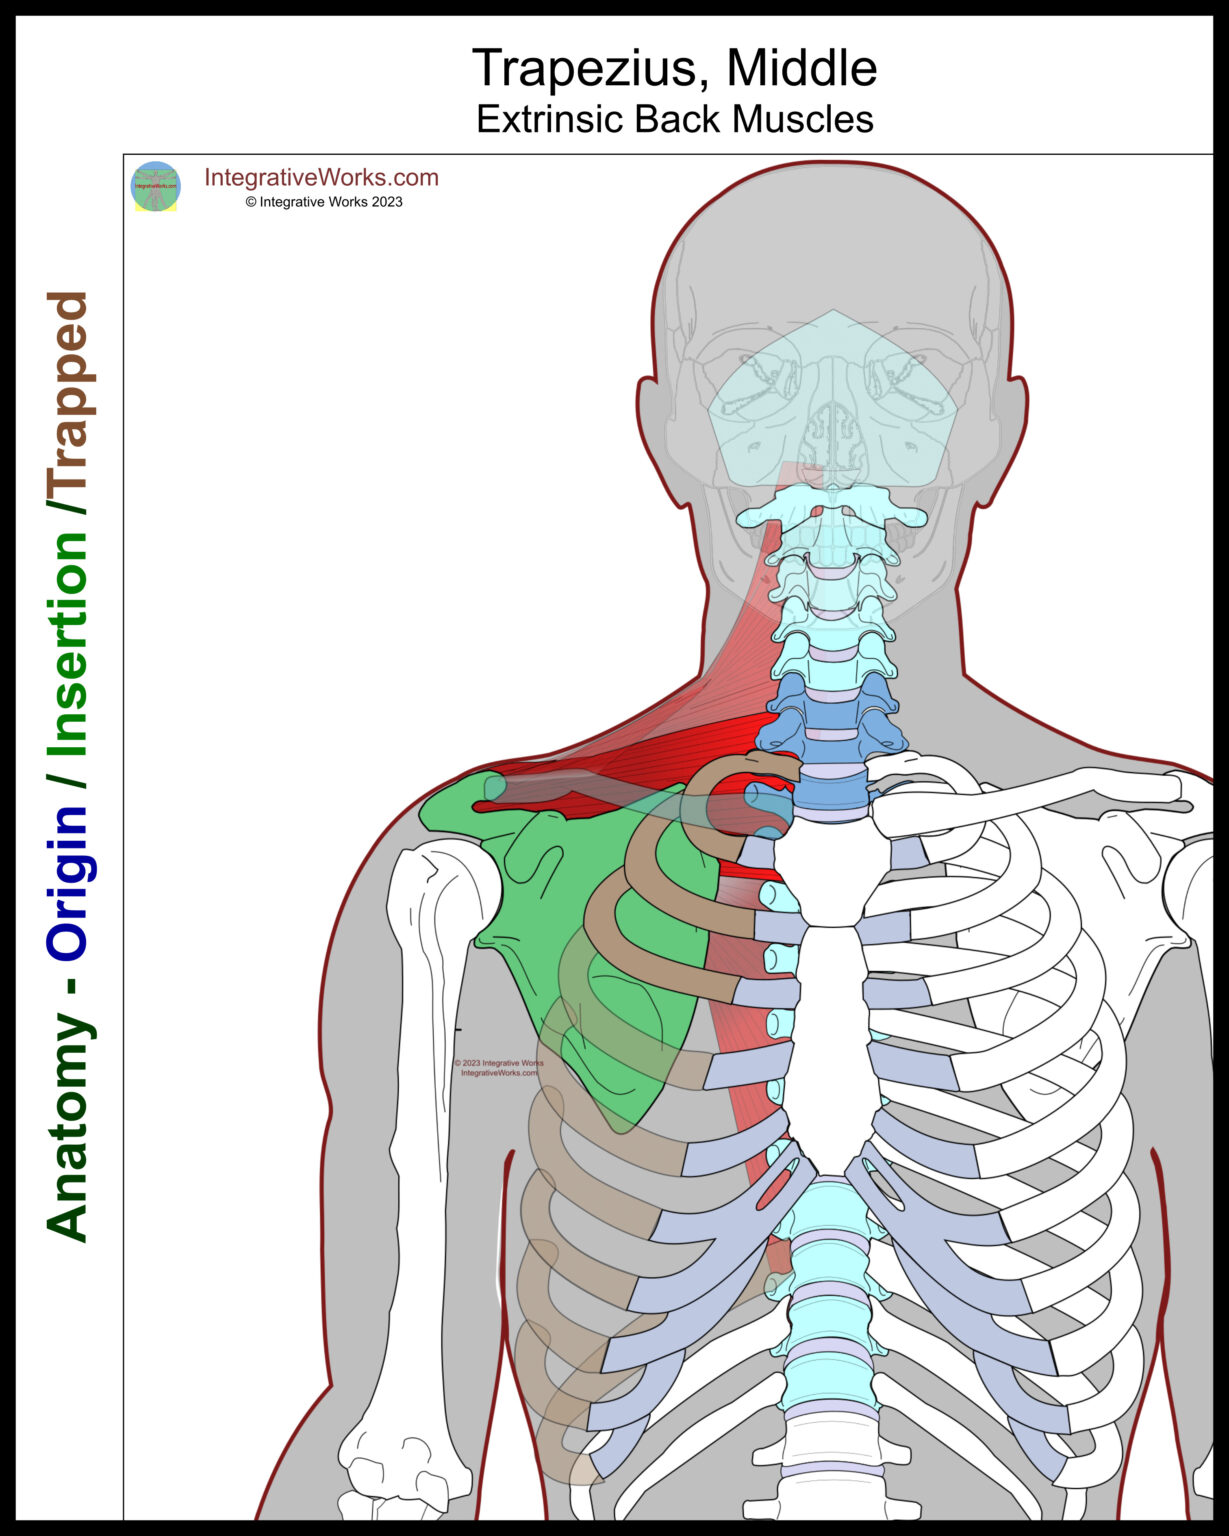 Trapezius Functional Anatomy Integrative Works